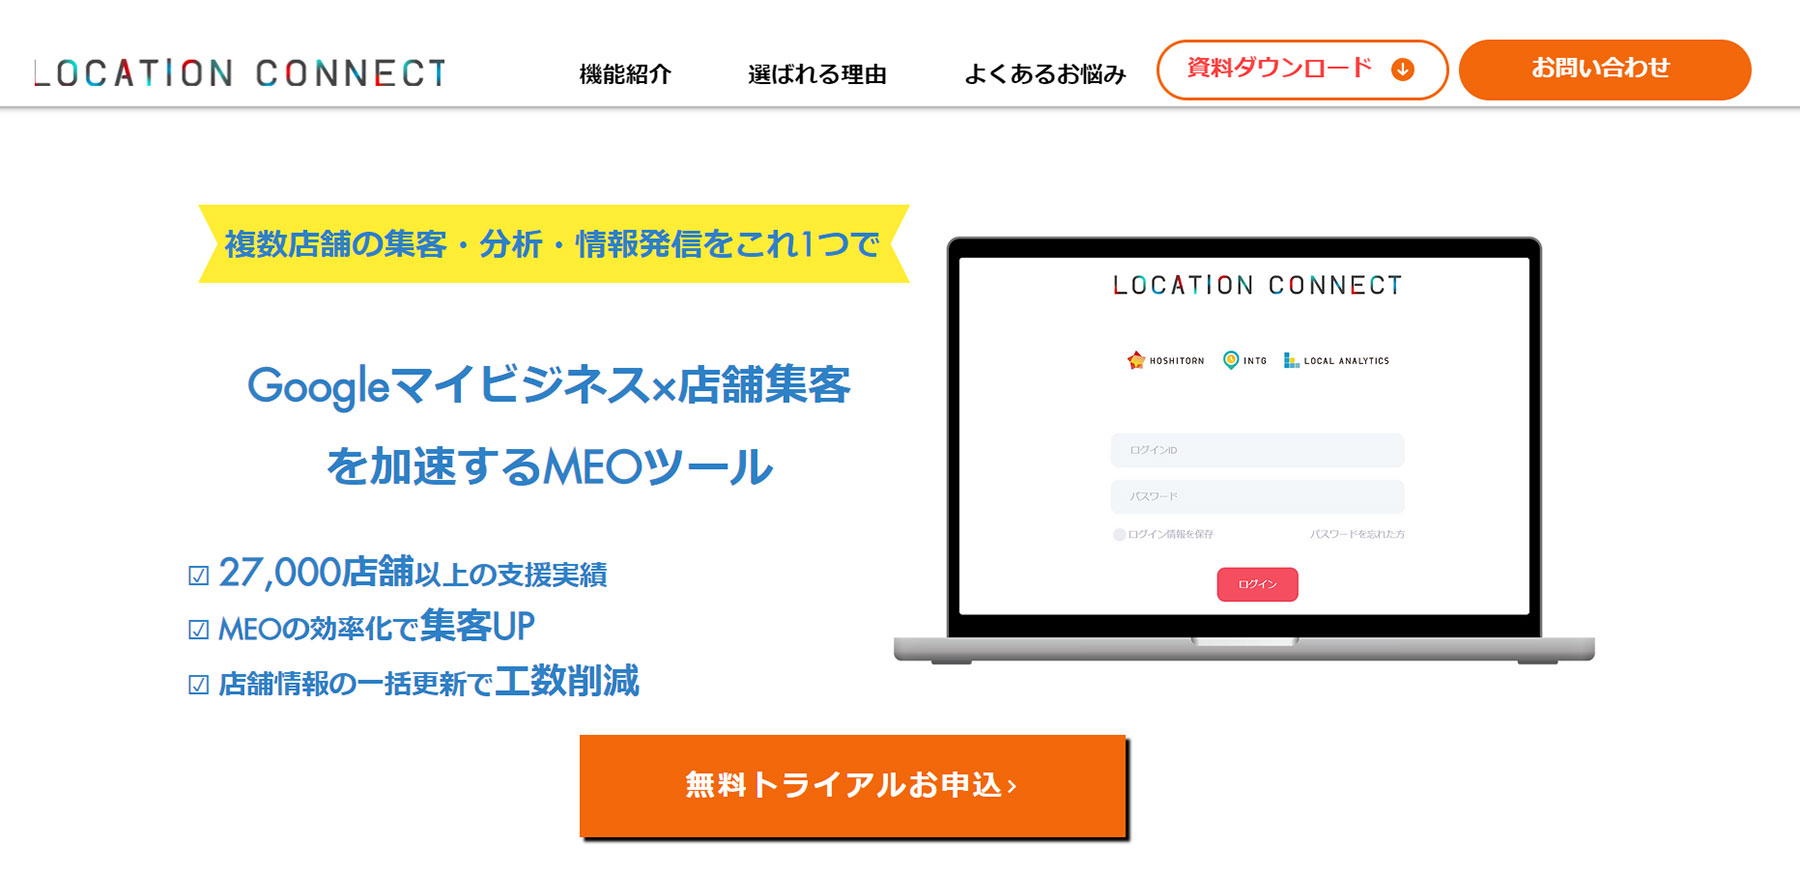 Location Connect公式WEBサイト